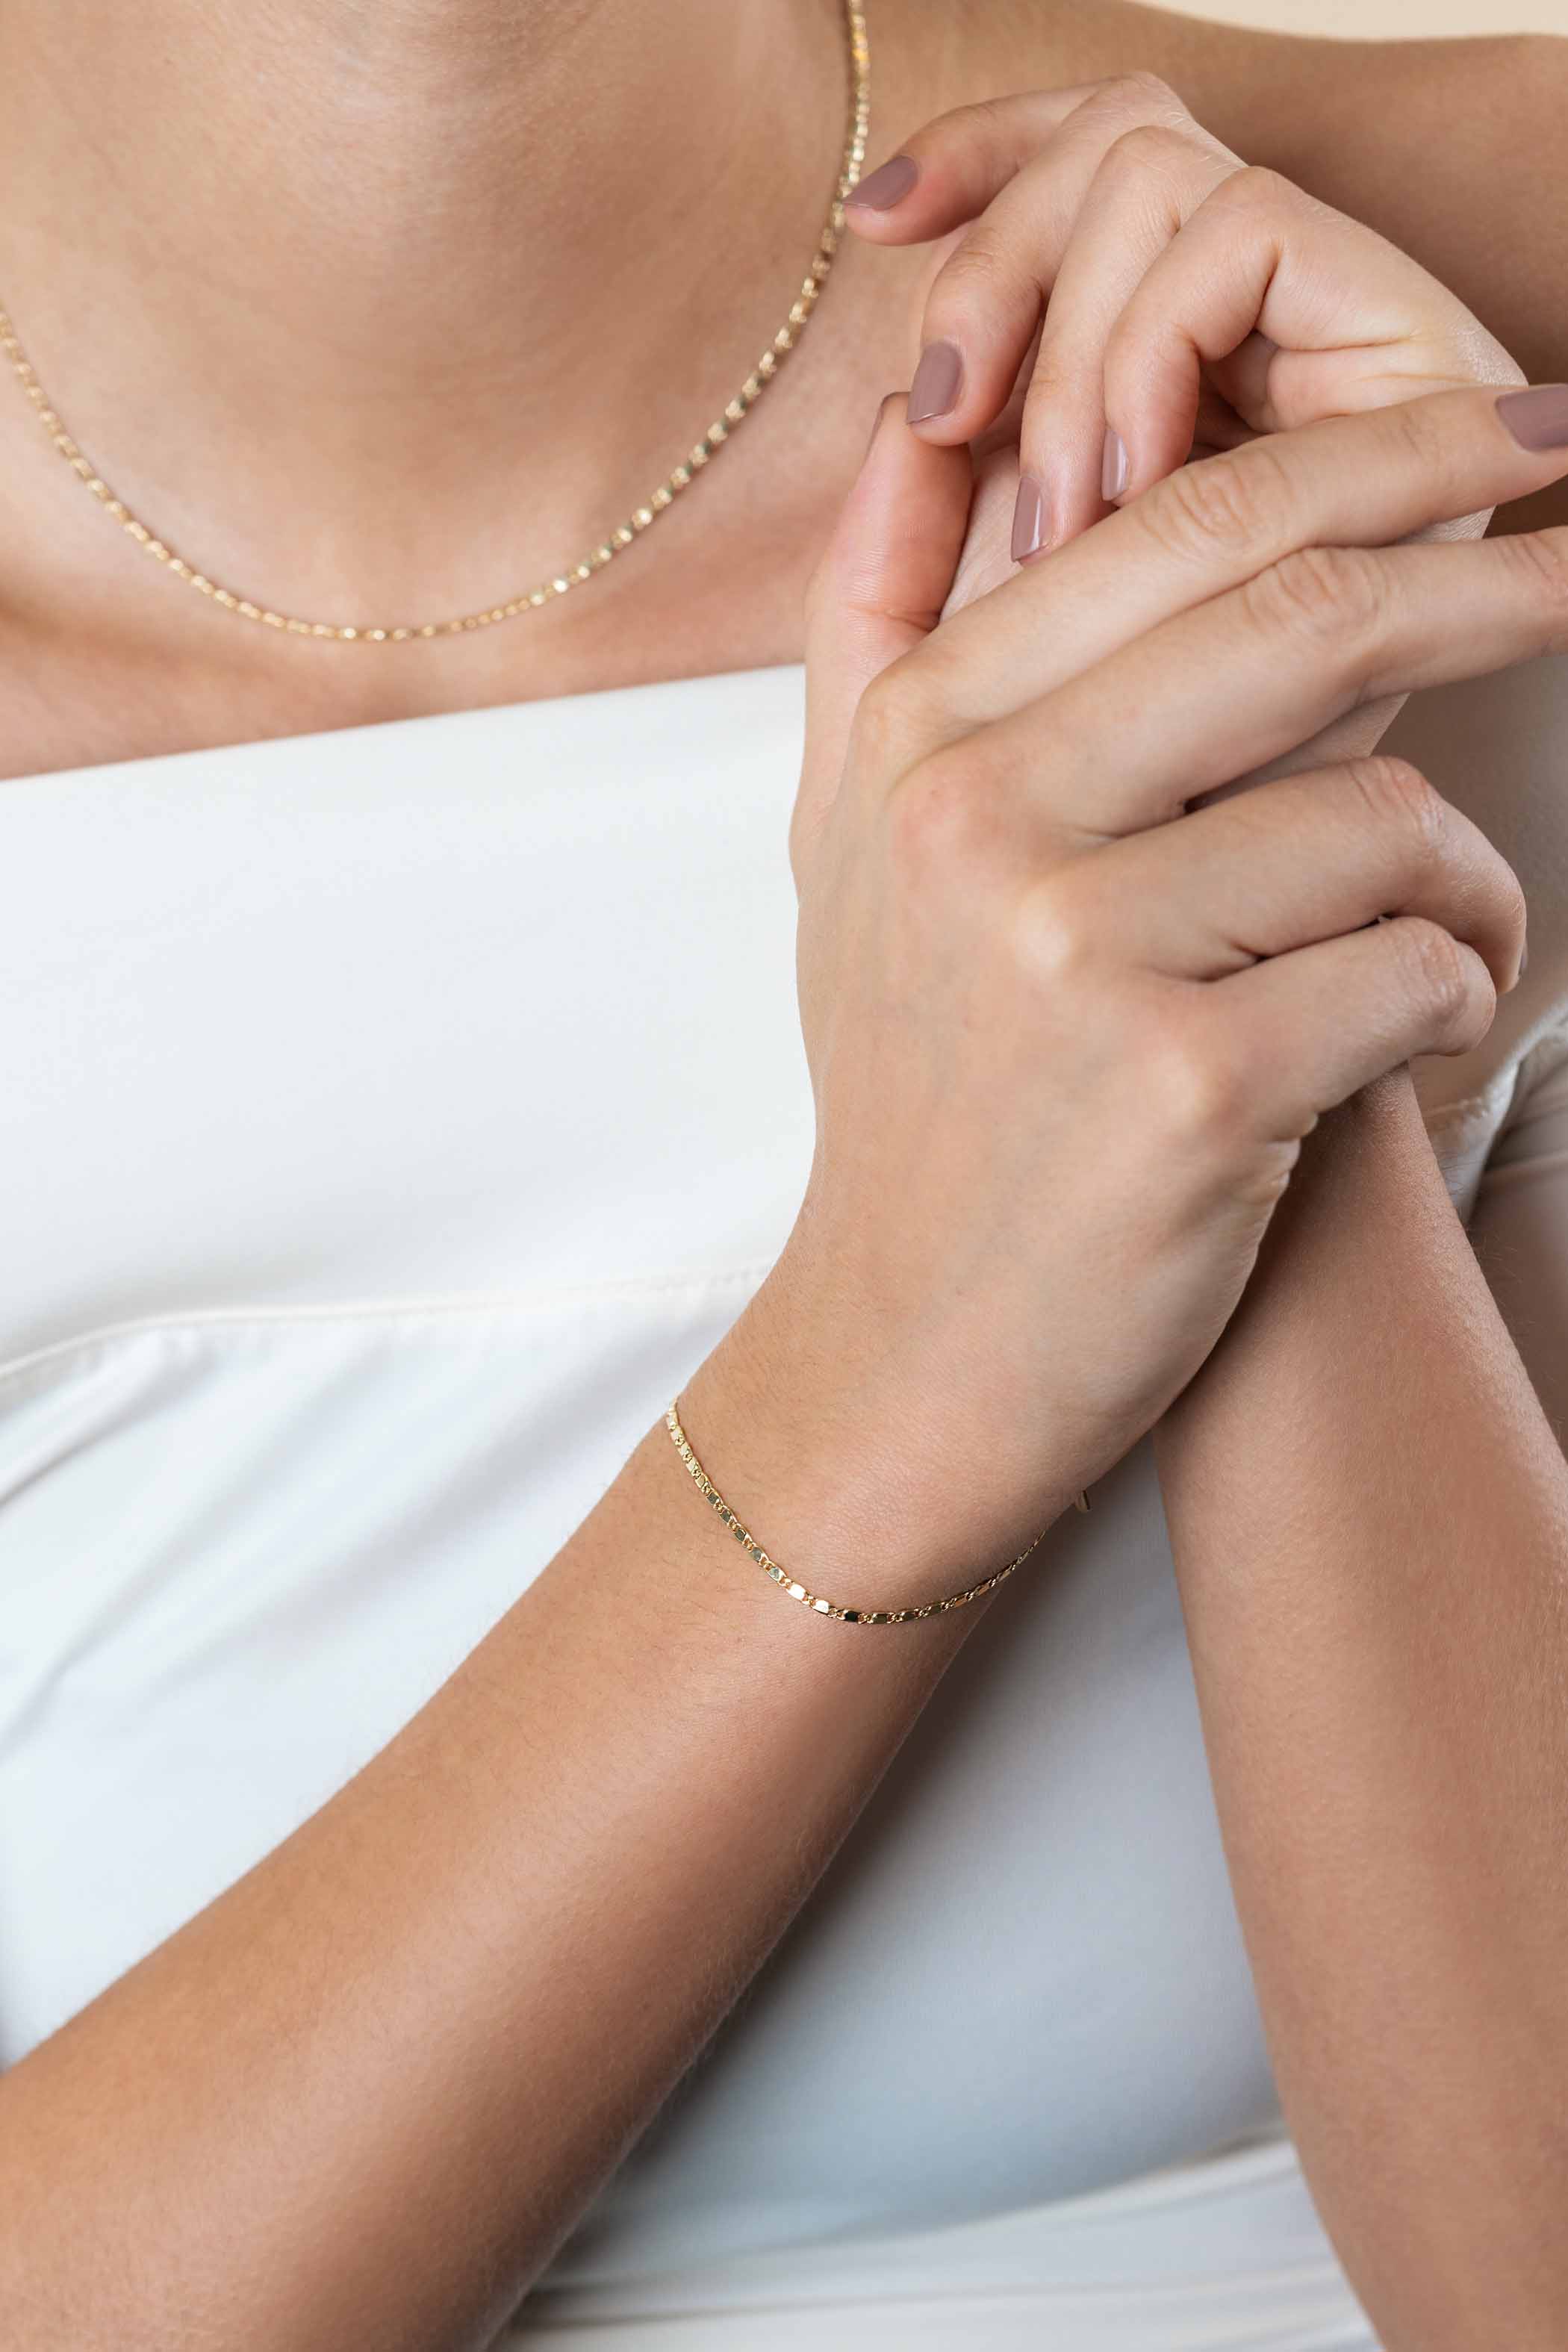 ZINZI Gold 14 carat solid gold bracelet with shiny fantasy plates, 1.7mm wide, 17-19cm ZGA497